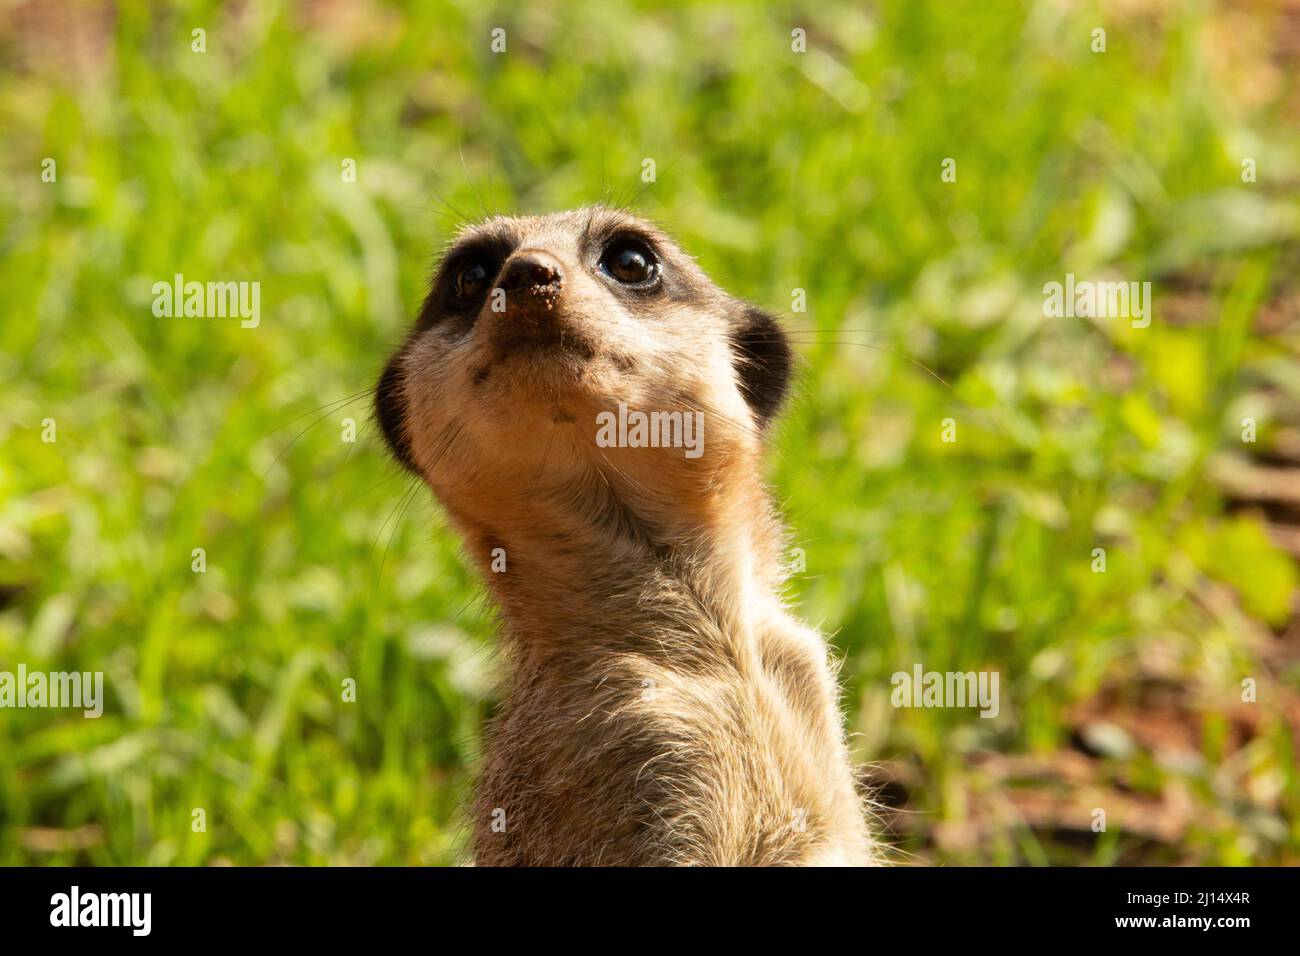 Slender tailed meerkat (Suricata suricatta) head of a single slender tailed meerkat with a natural green background Stock Photo